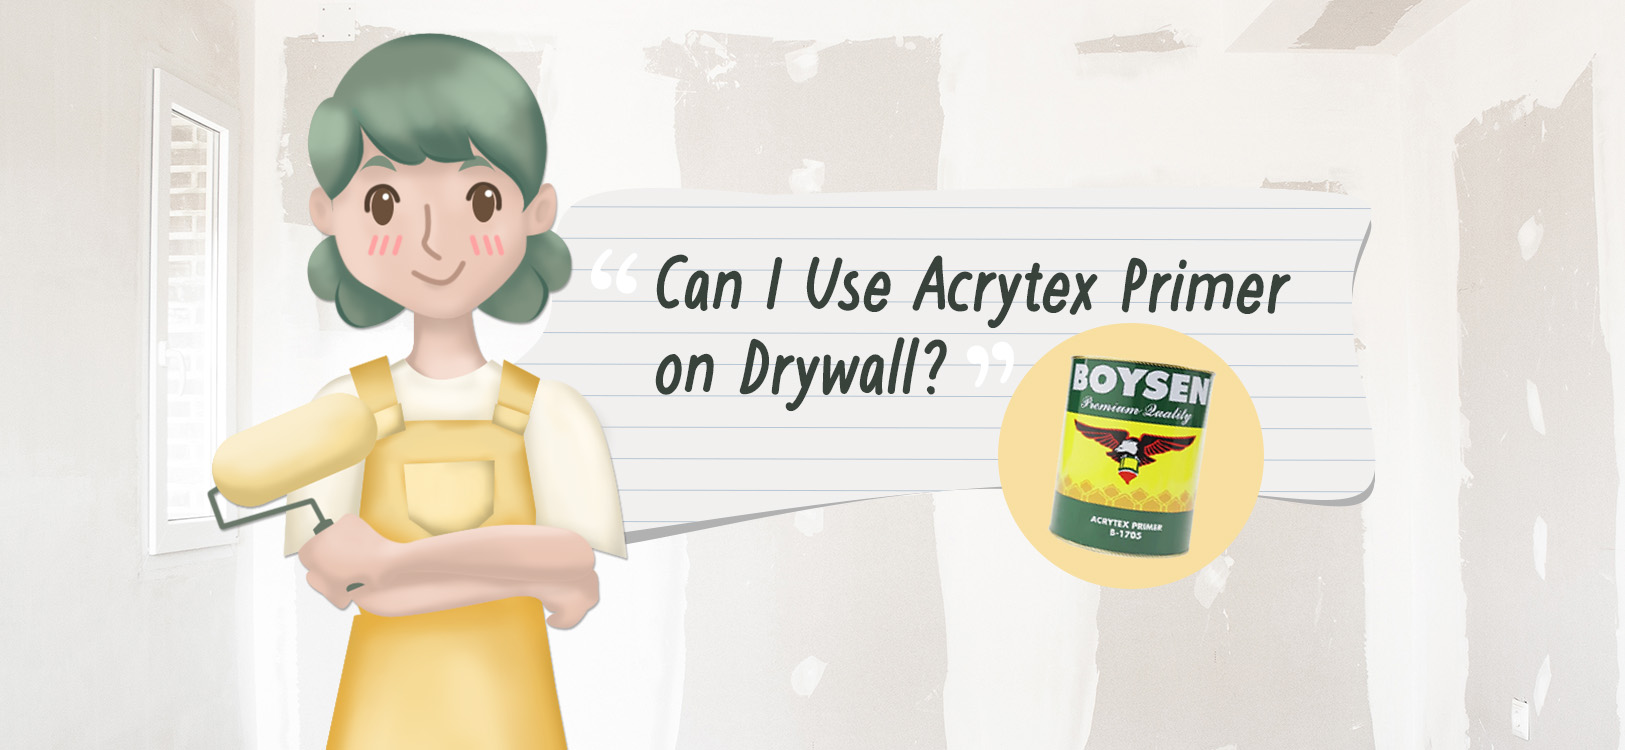 Paint TechTalk with Lettie: Can I Use Acrytex Primer on Drywall?